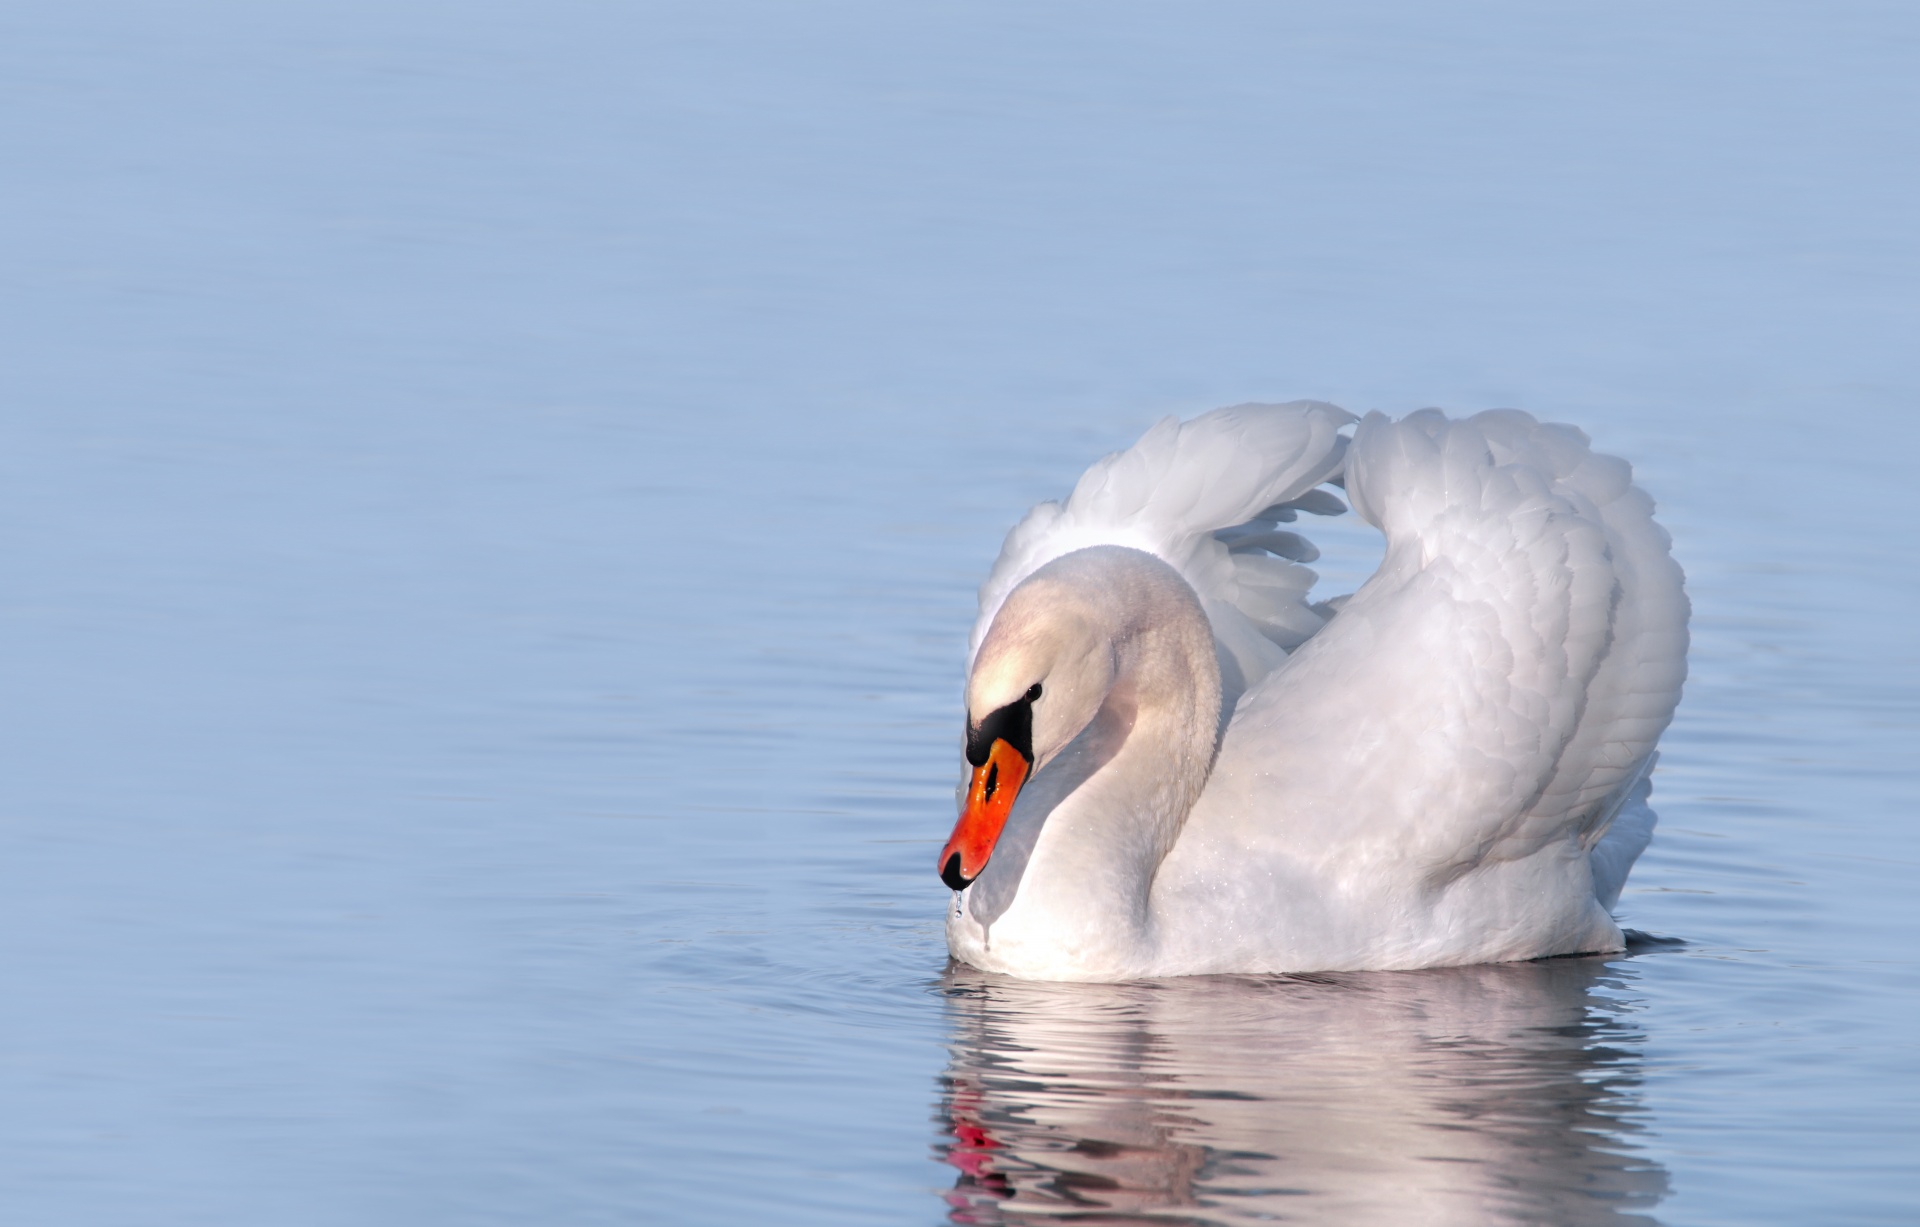 Swan Water Mirroring Birds